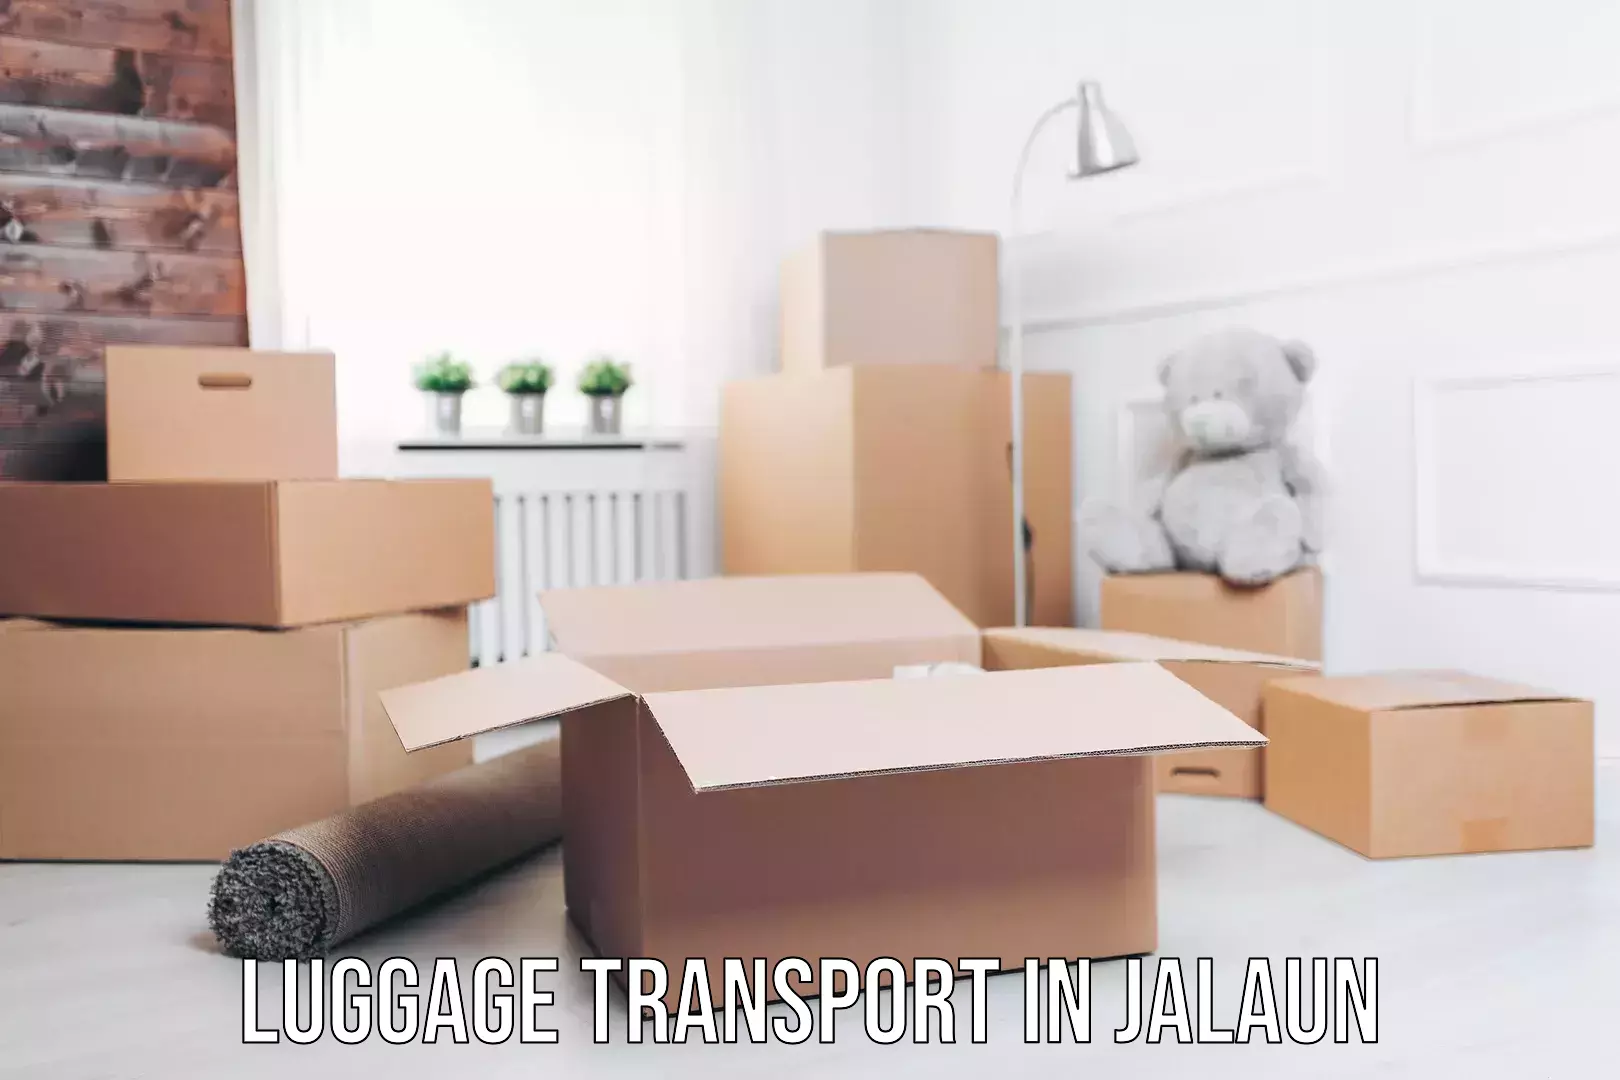 Luggage dispatch service in Jalaun